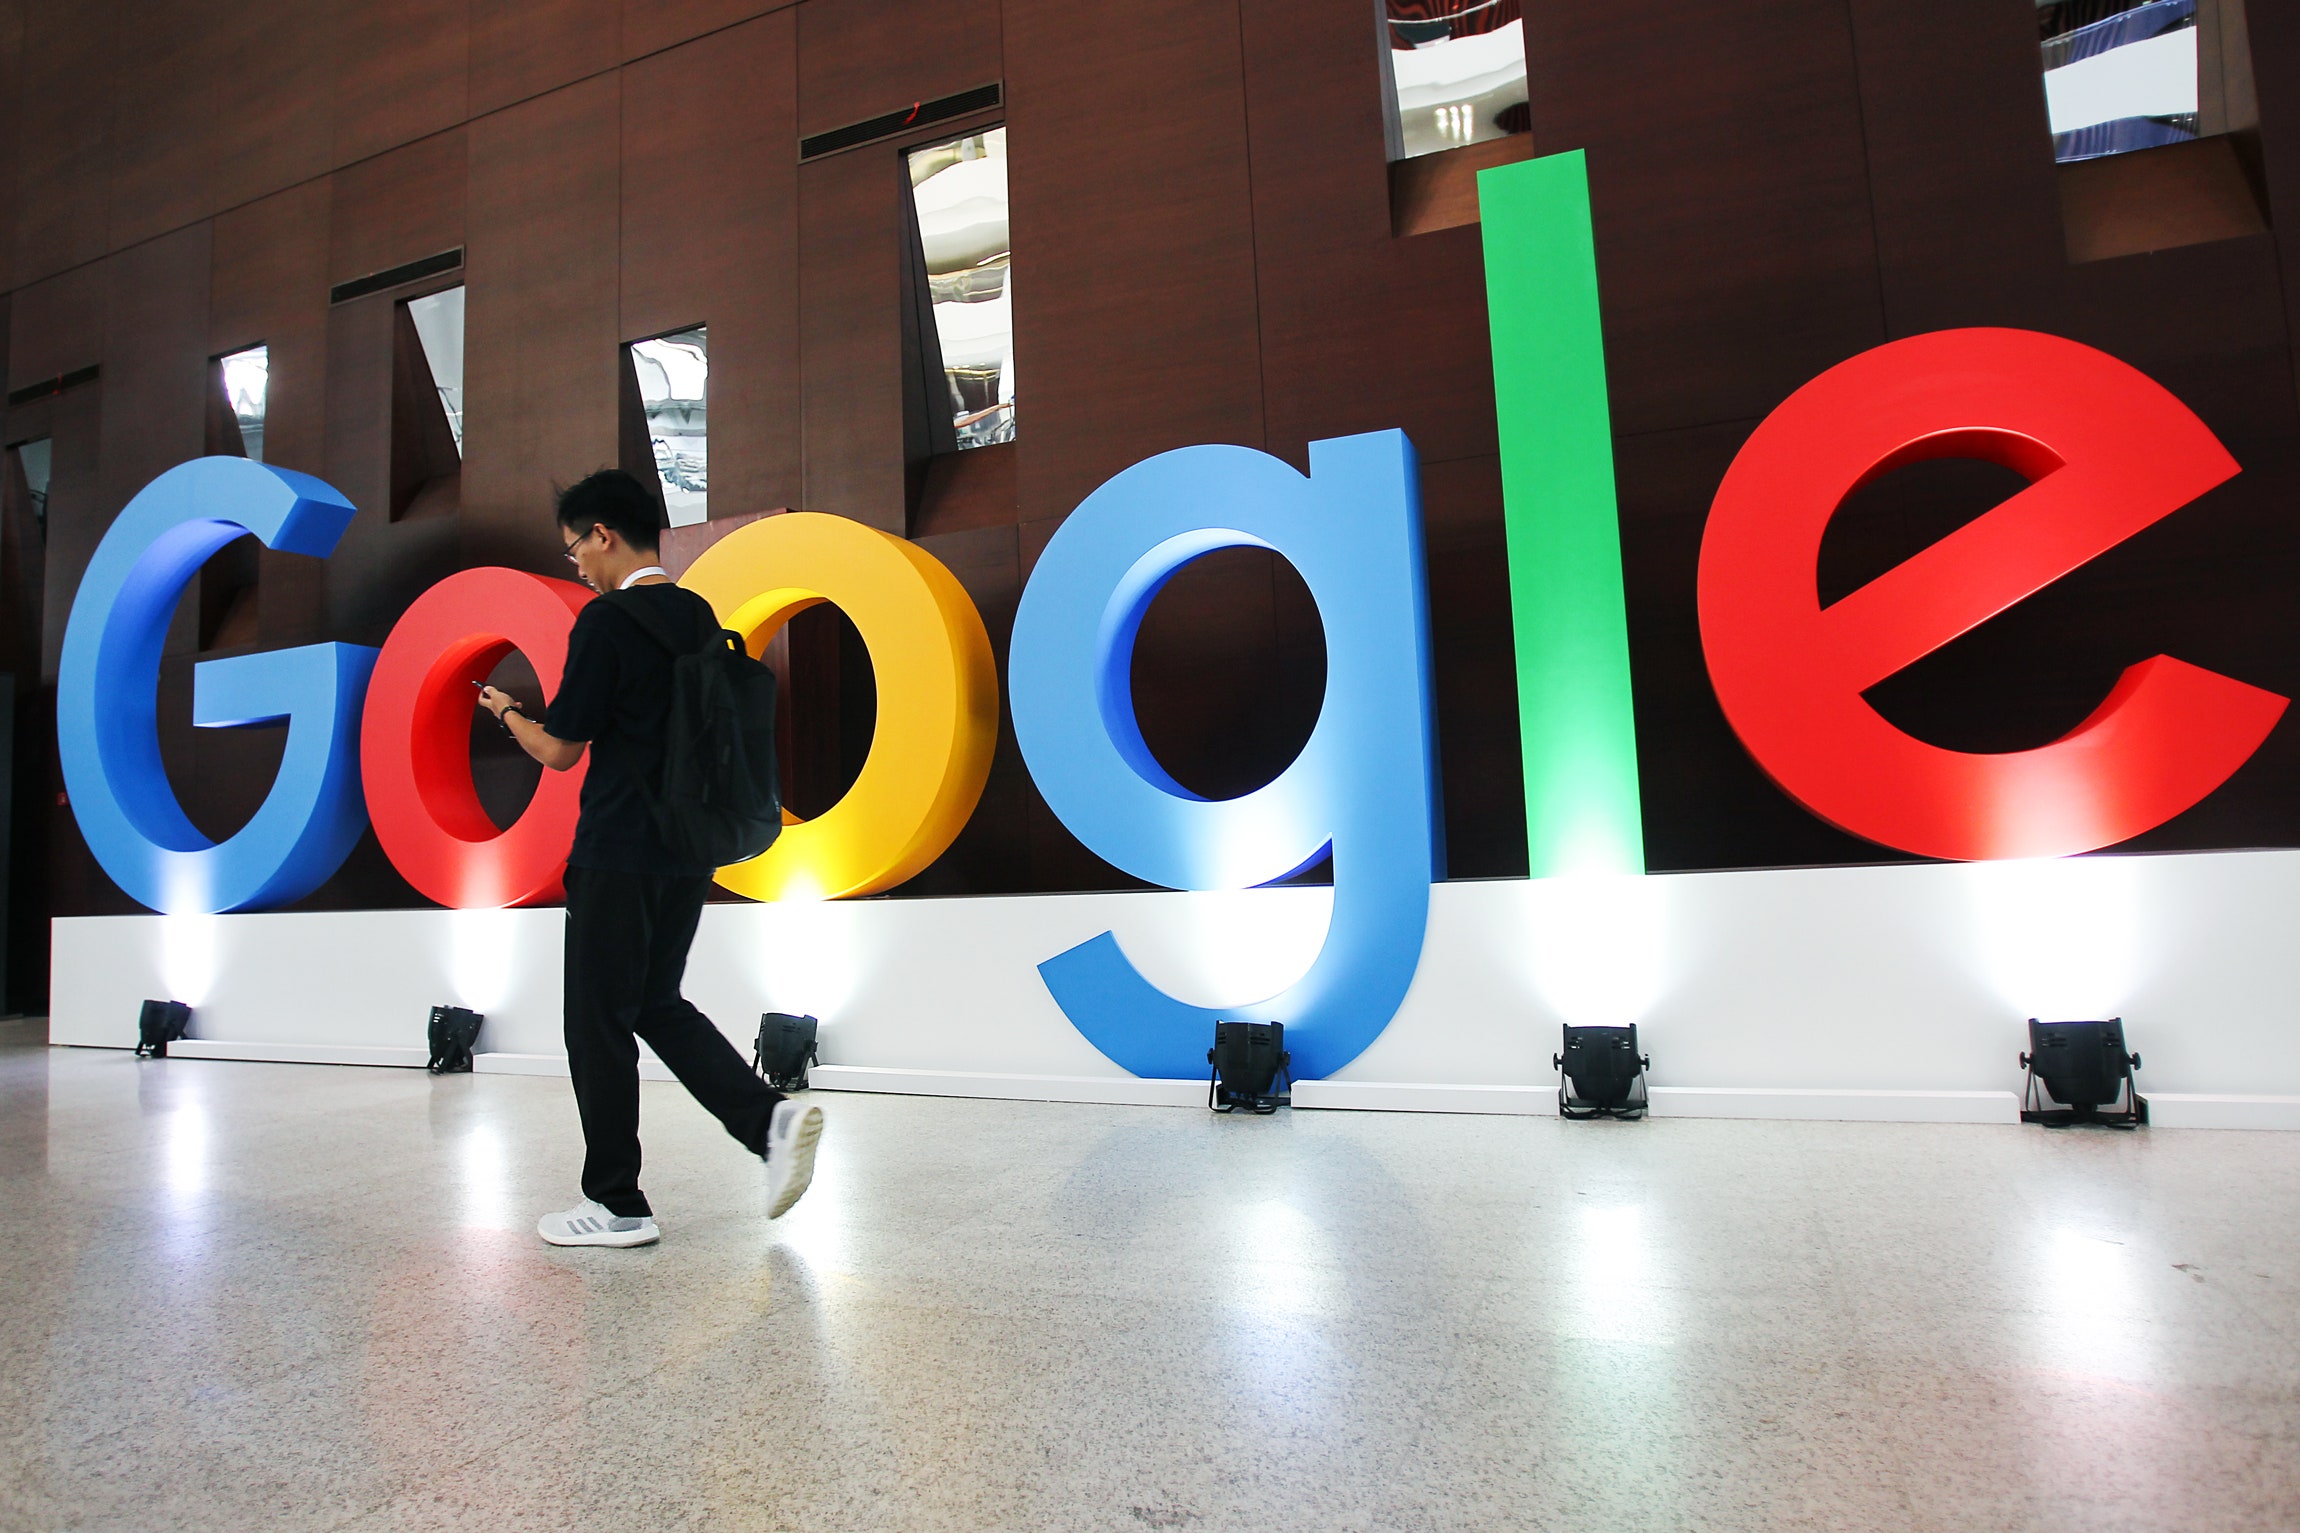 Google αναζήτηση 2021: Τι αναζήτησαν φέτος περισσότερο οι άνθρωποι στη Google παγκοσμίως;